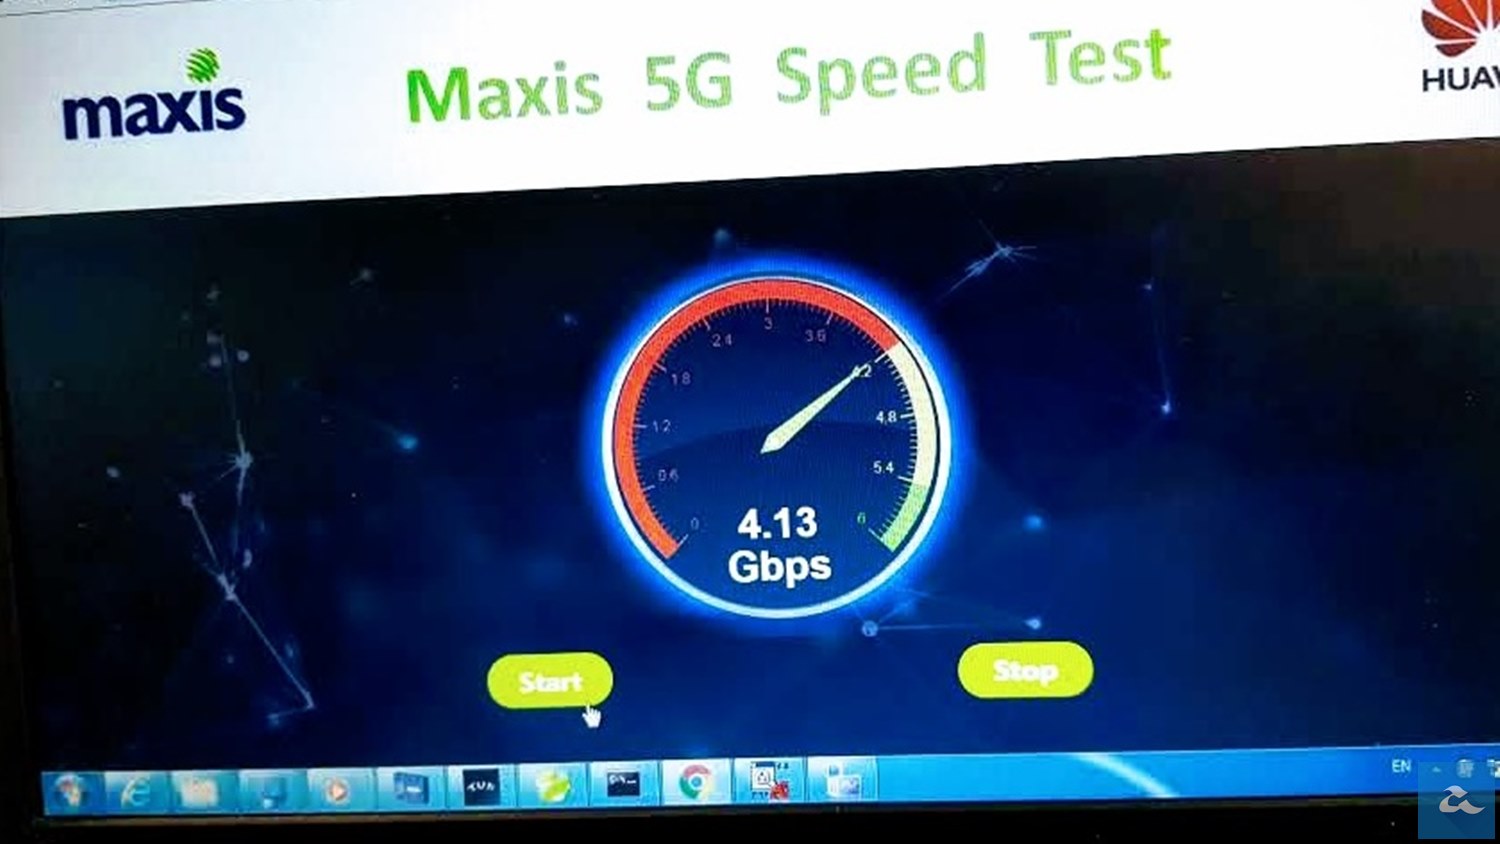 Maxis Menangguhkan Perjanjian Akses Bersama DNB Untuk 5G